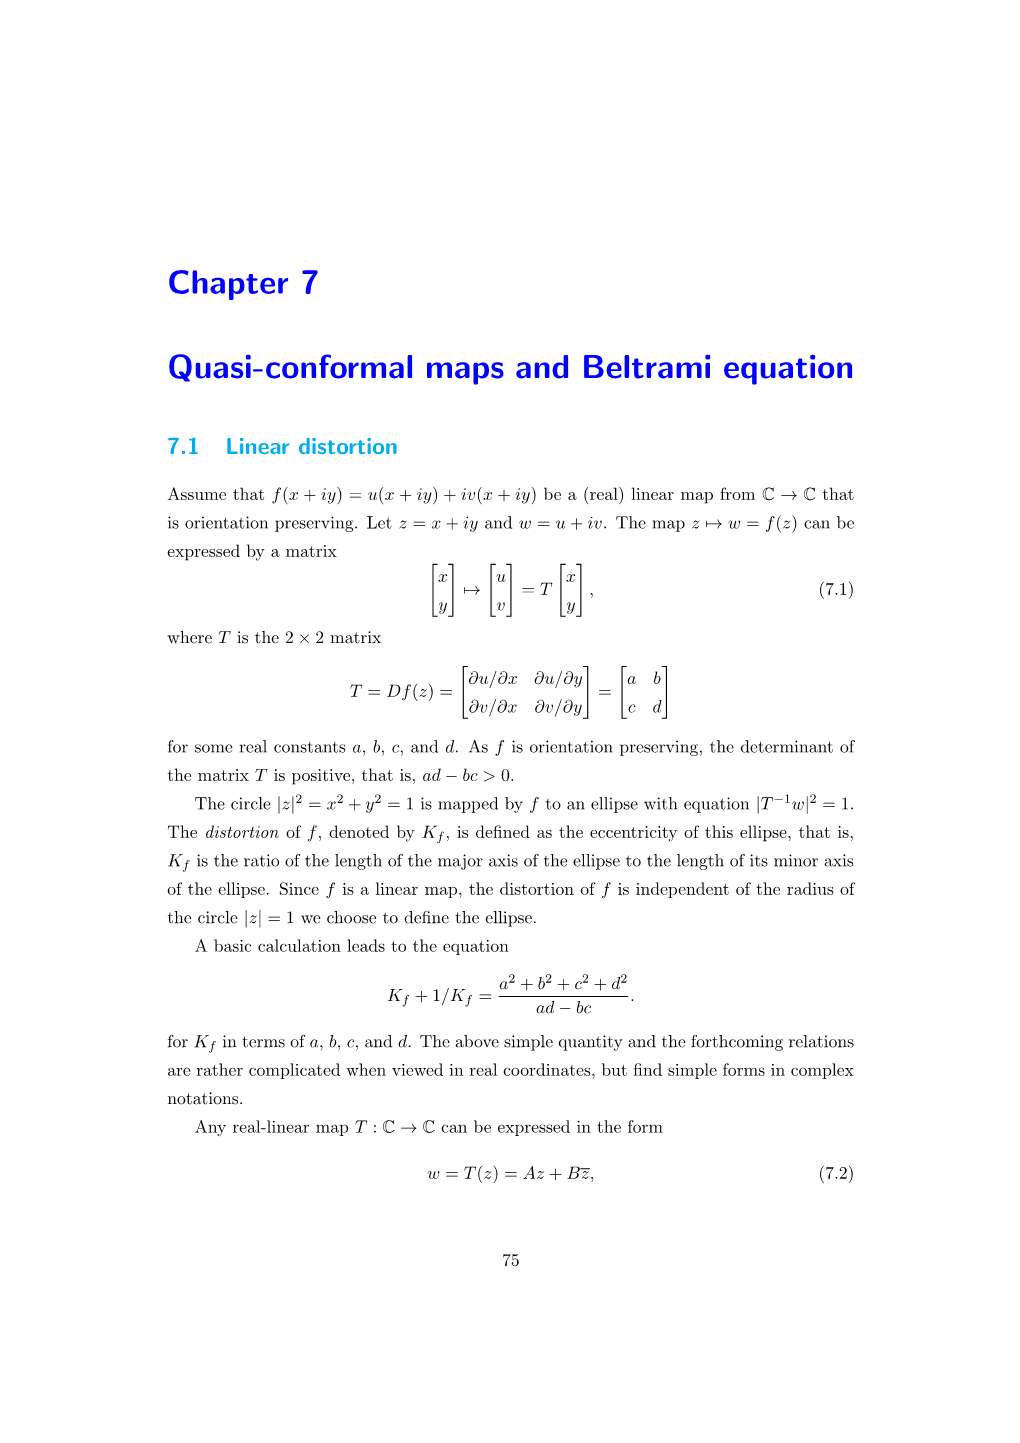 Chapter 7 Quasi-Conformal Maps and Beltrami Equation